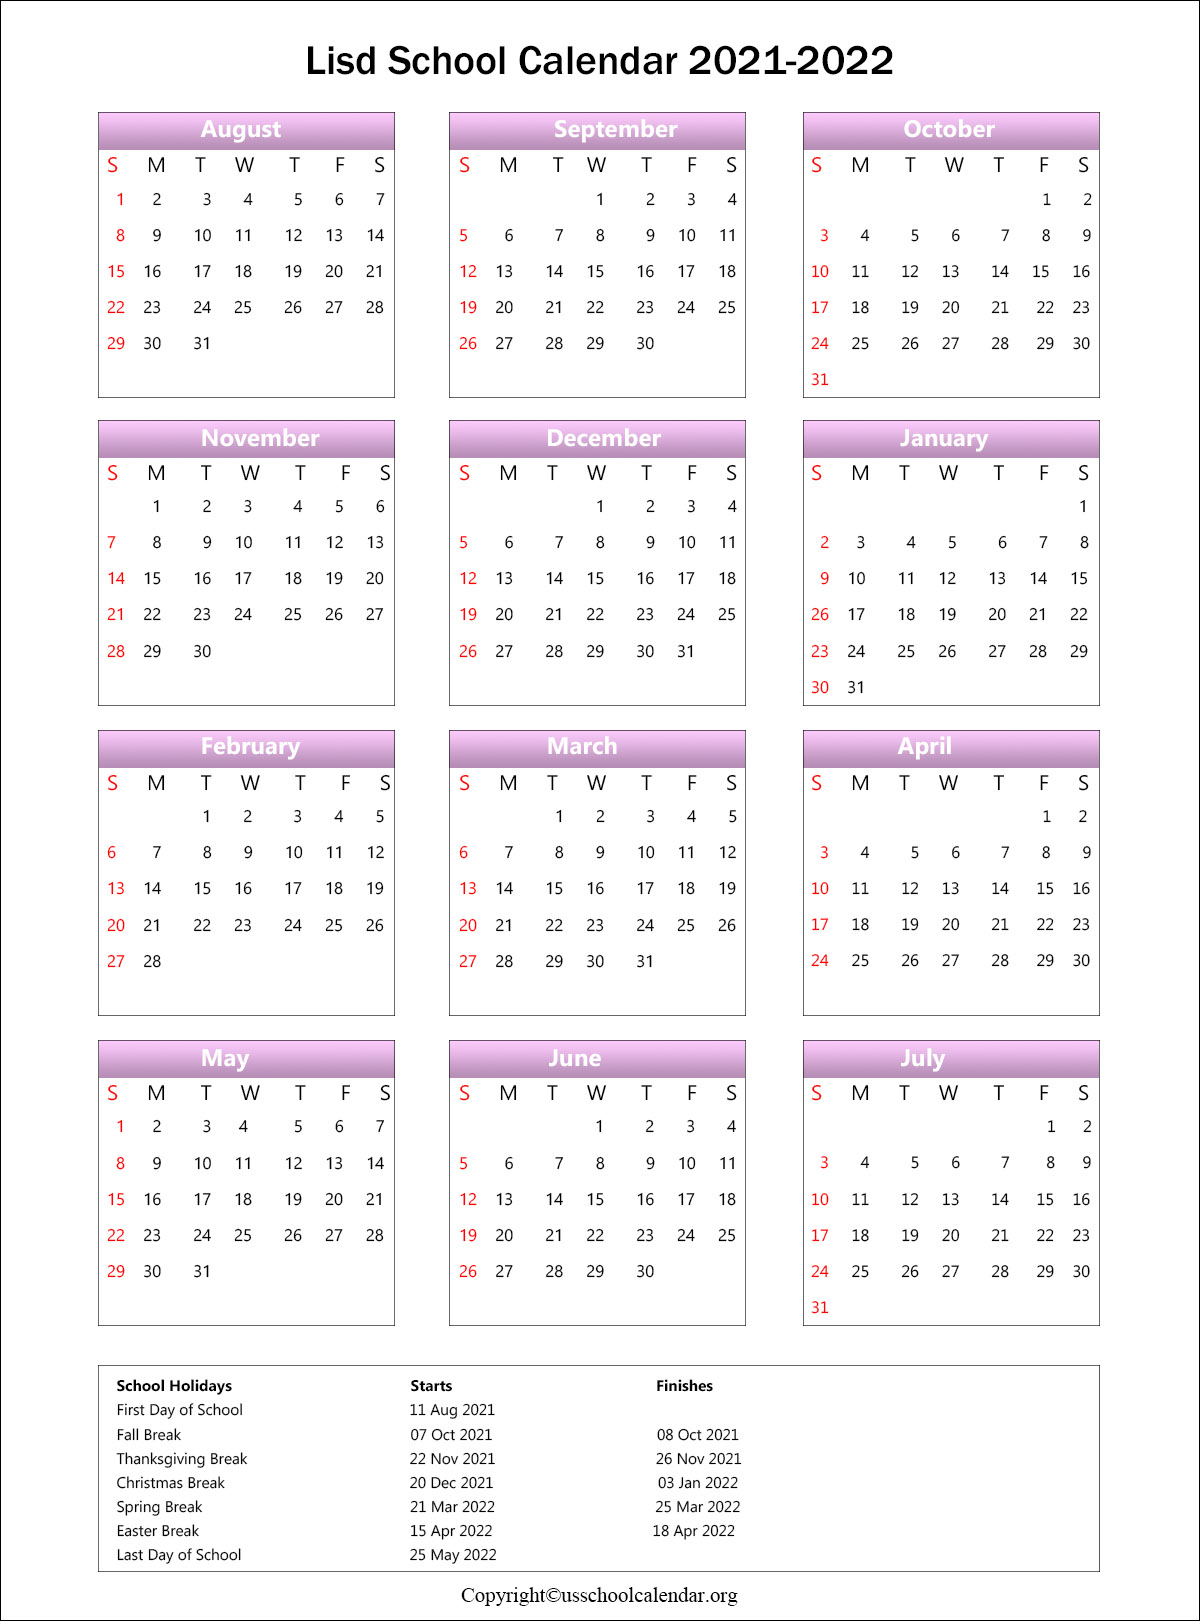 Lisd Calendar 2022 23 Lisd School Calendar With Holidays 2021-2022 (Lewisville Isd School)